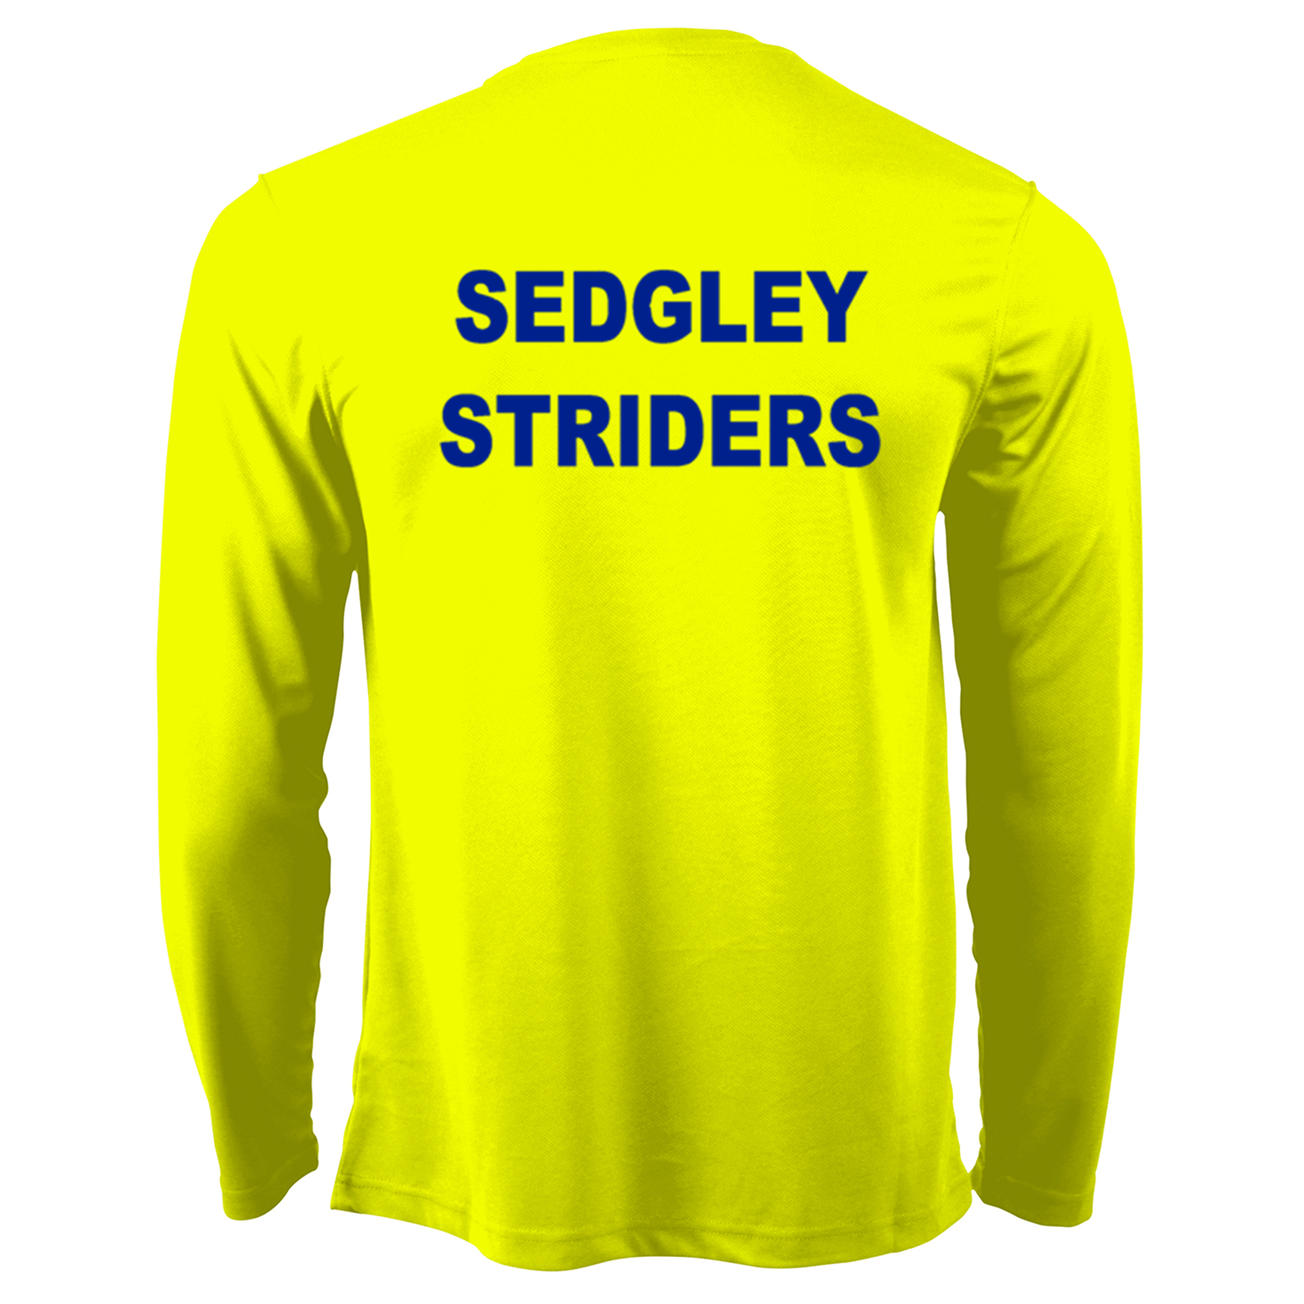 Sedgley Striders - Women's Long Sleeve T-Shirt [JC012]